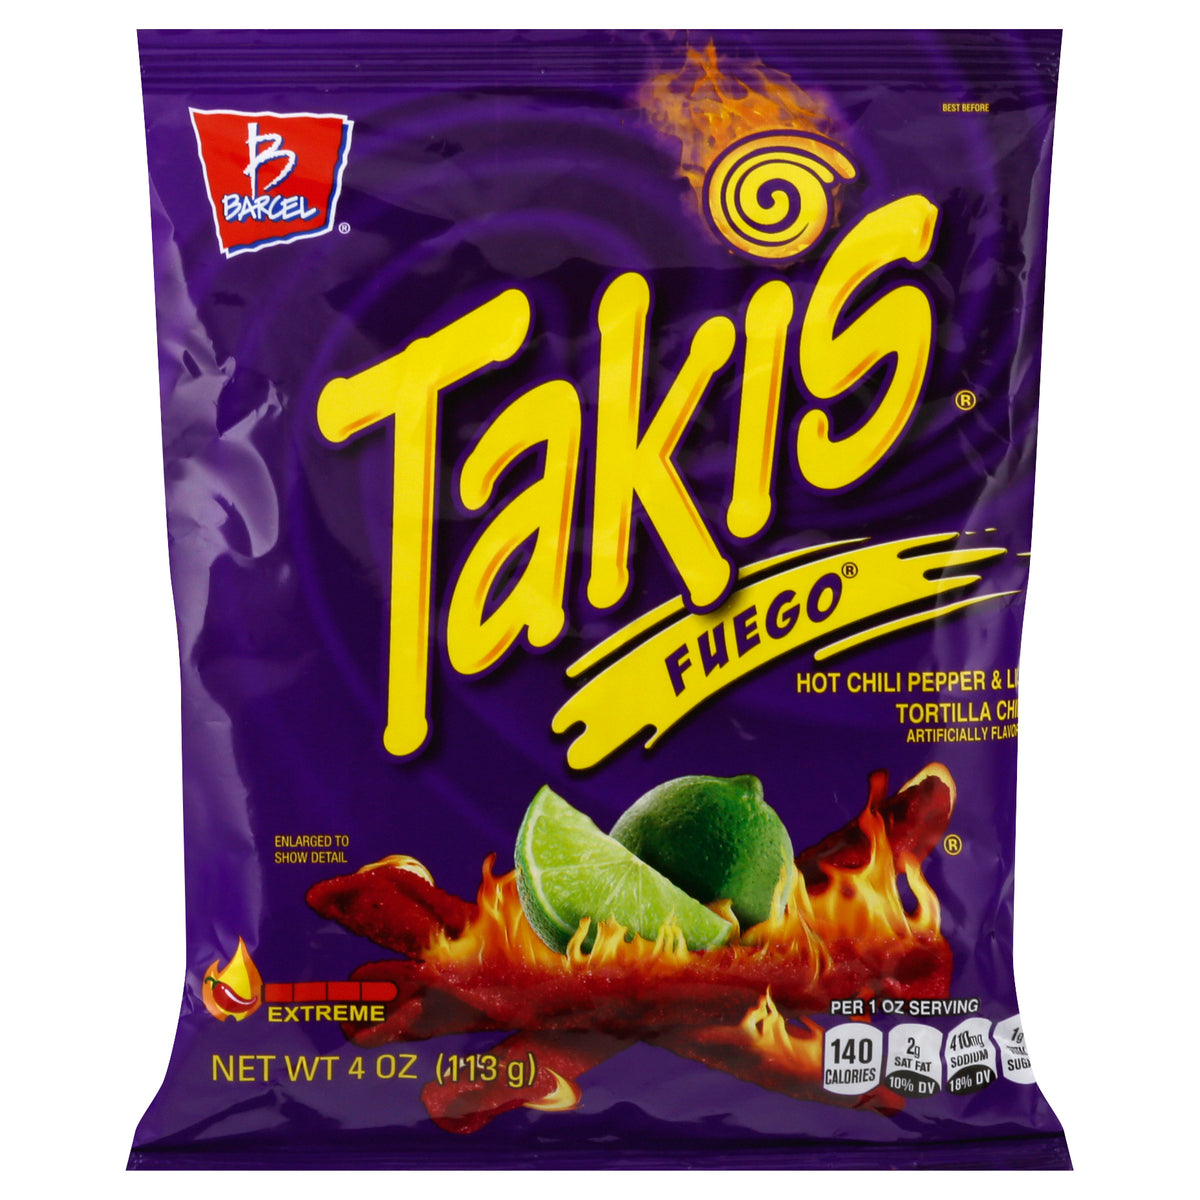 Takis® Stix, Corn Chips